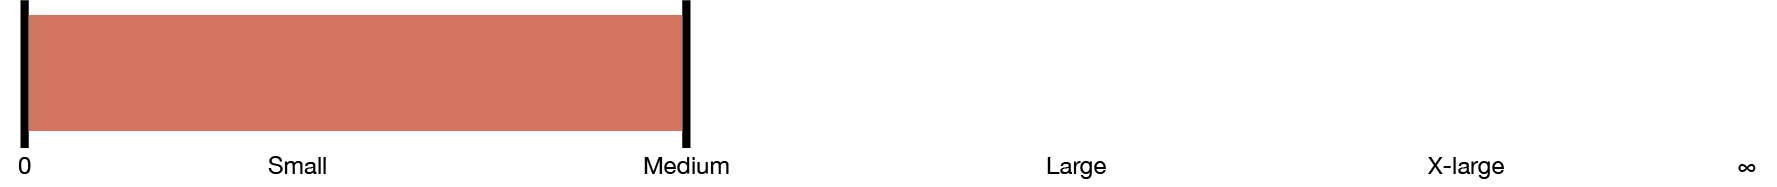 Styled MQ Logo